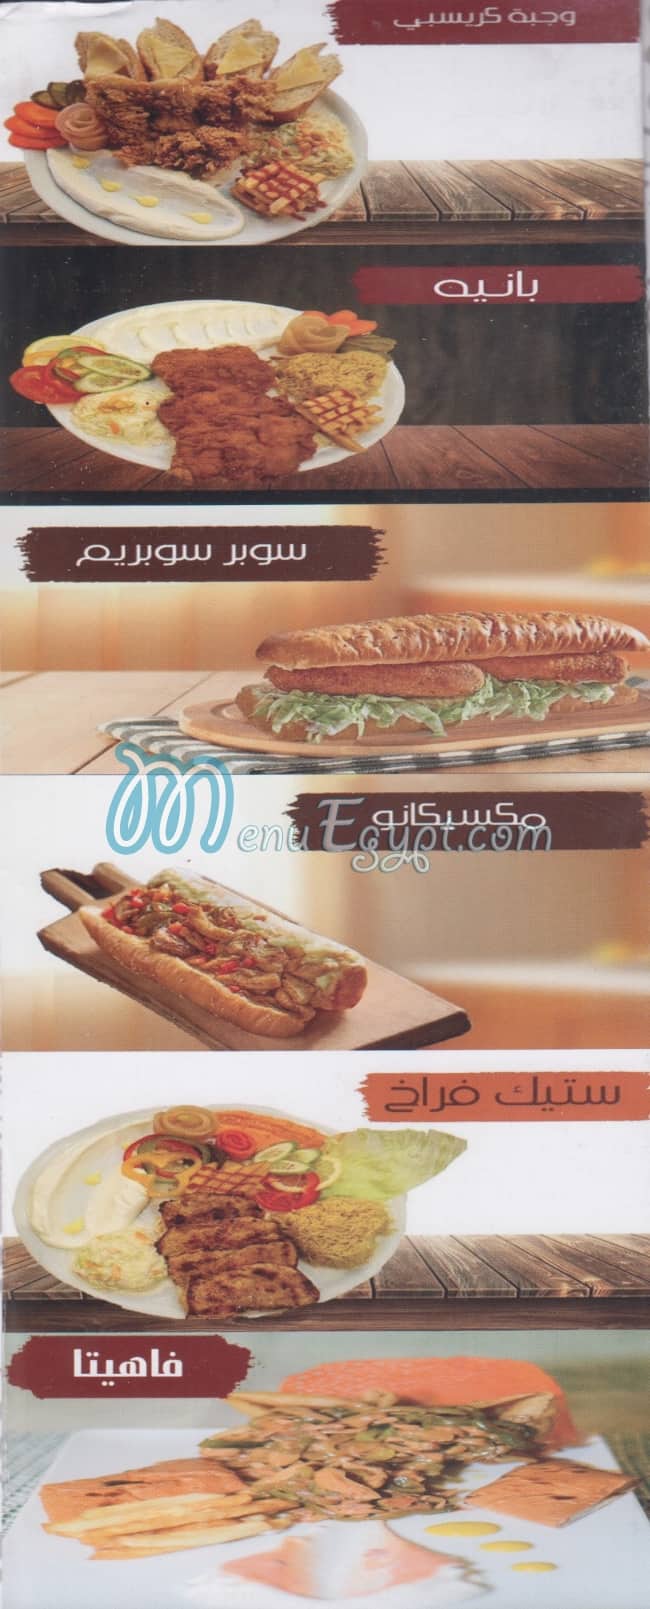 El Gawhara menu Egypt 2